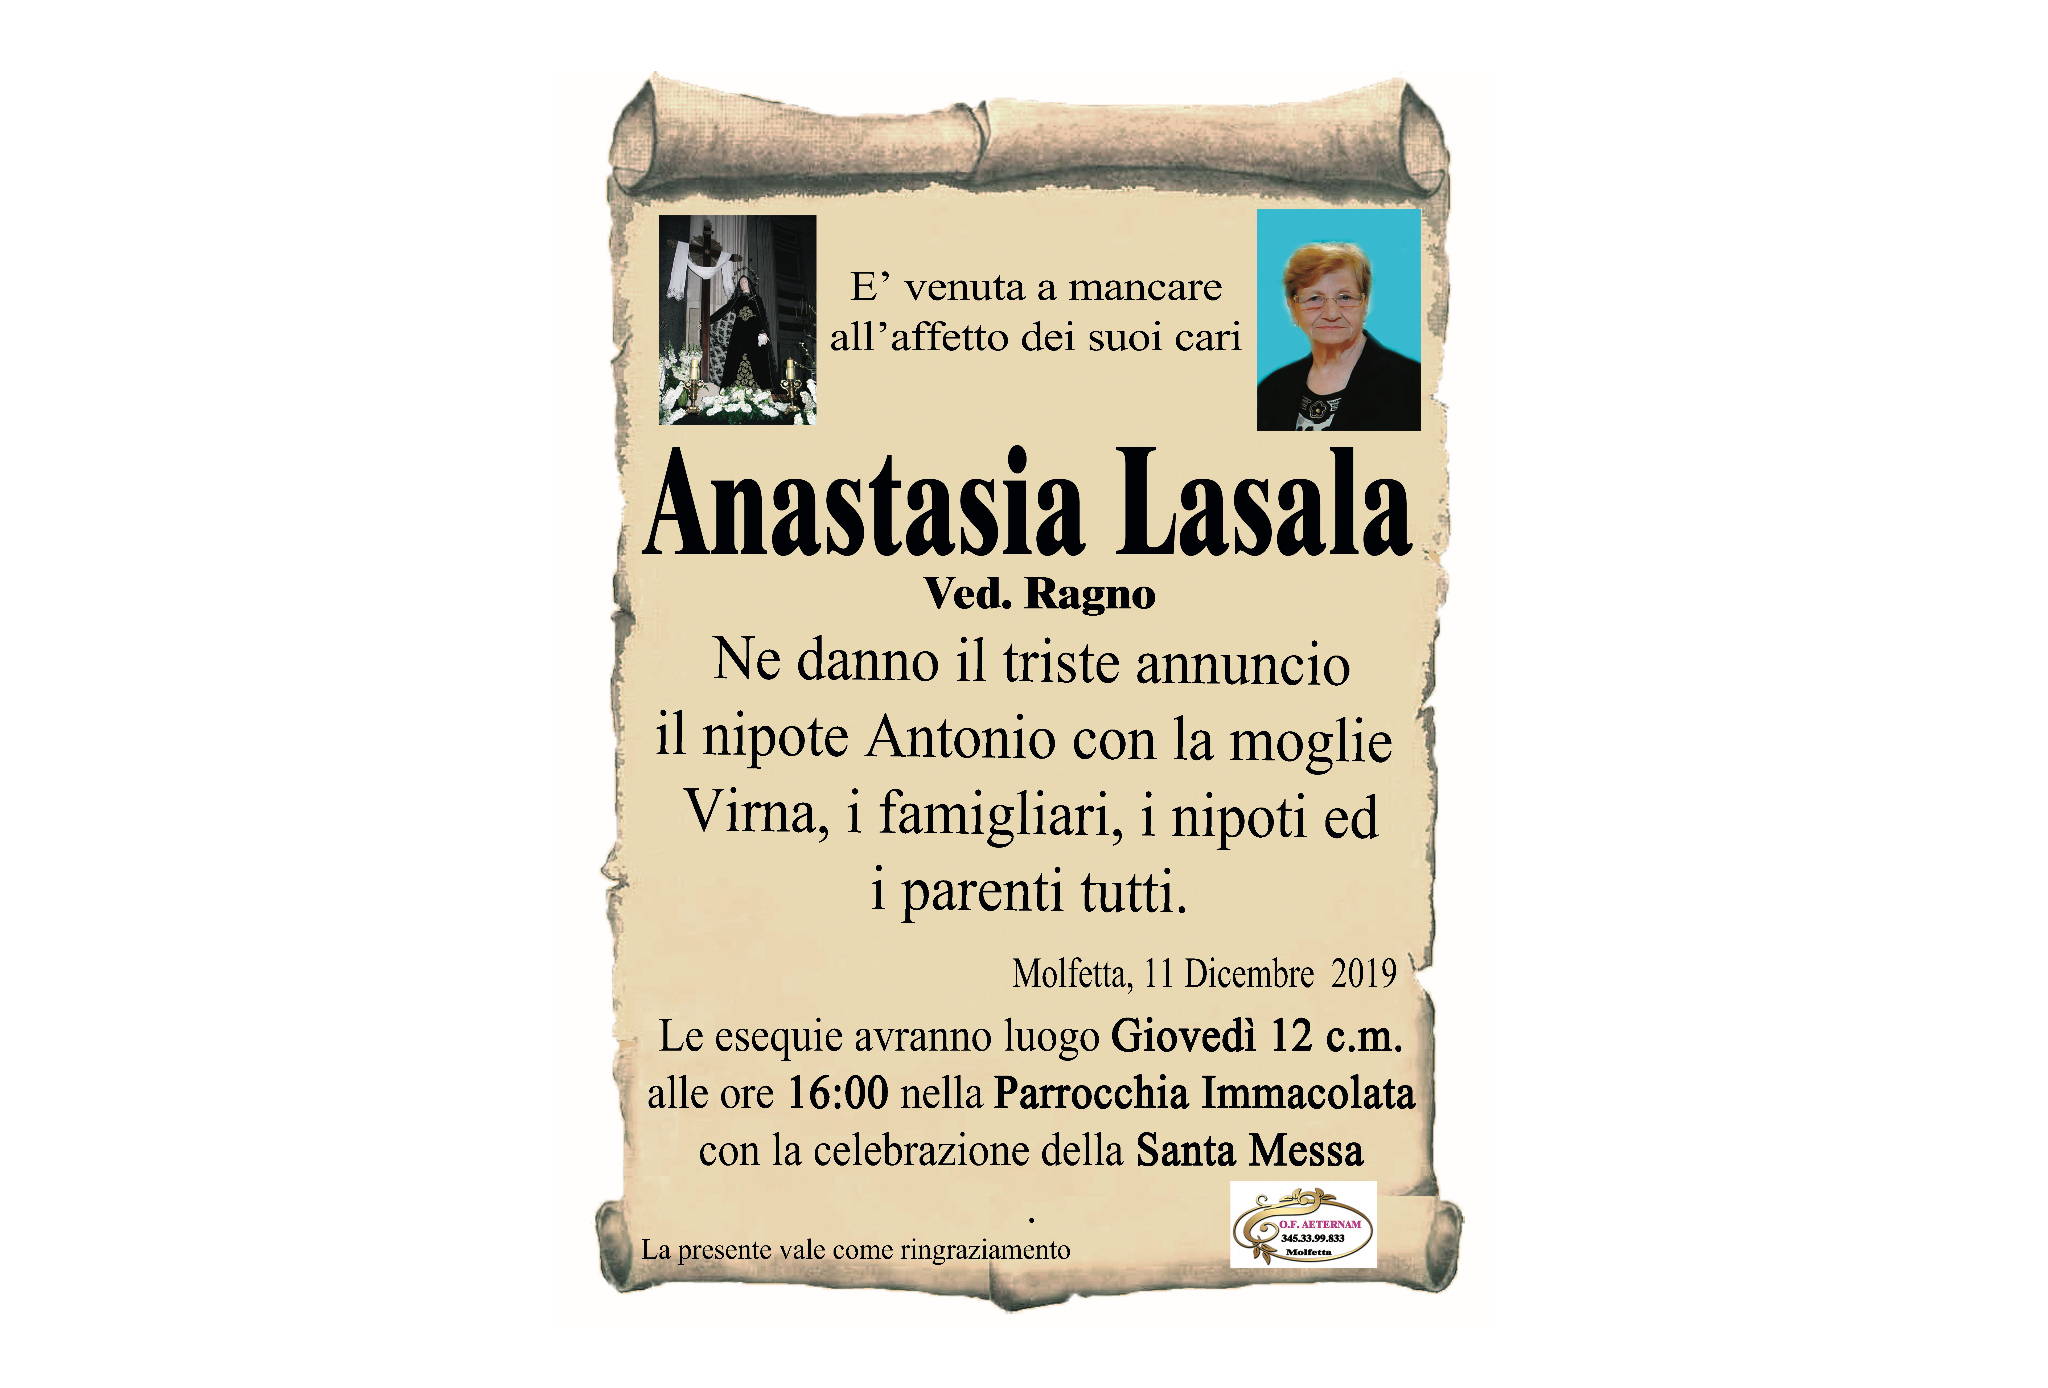 Anastasia Lasala